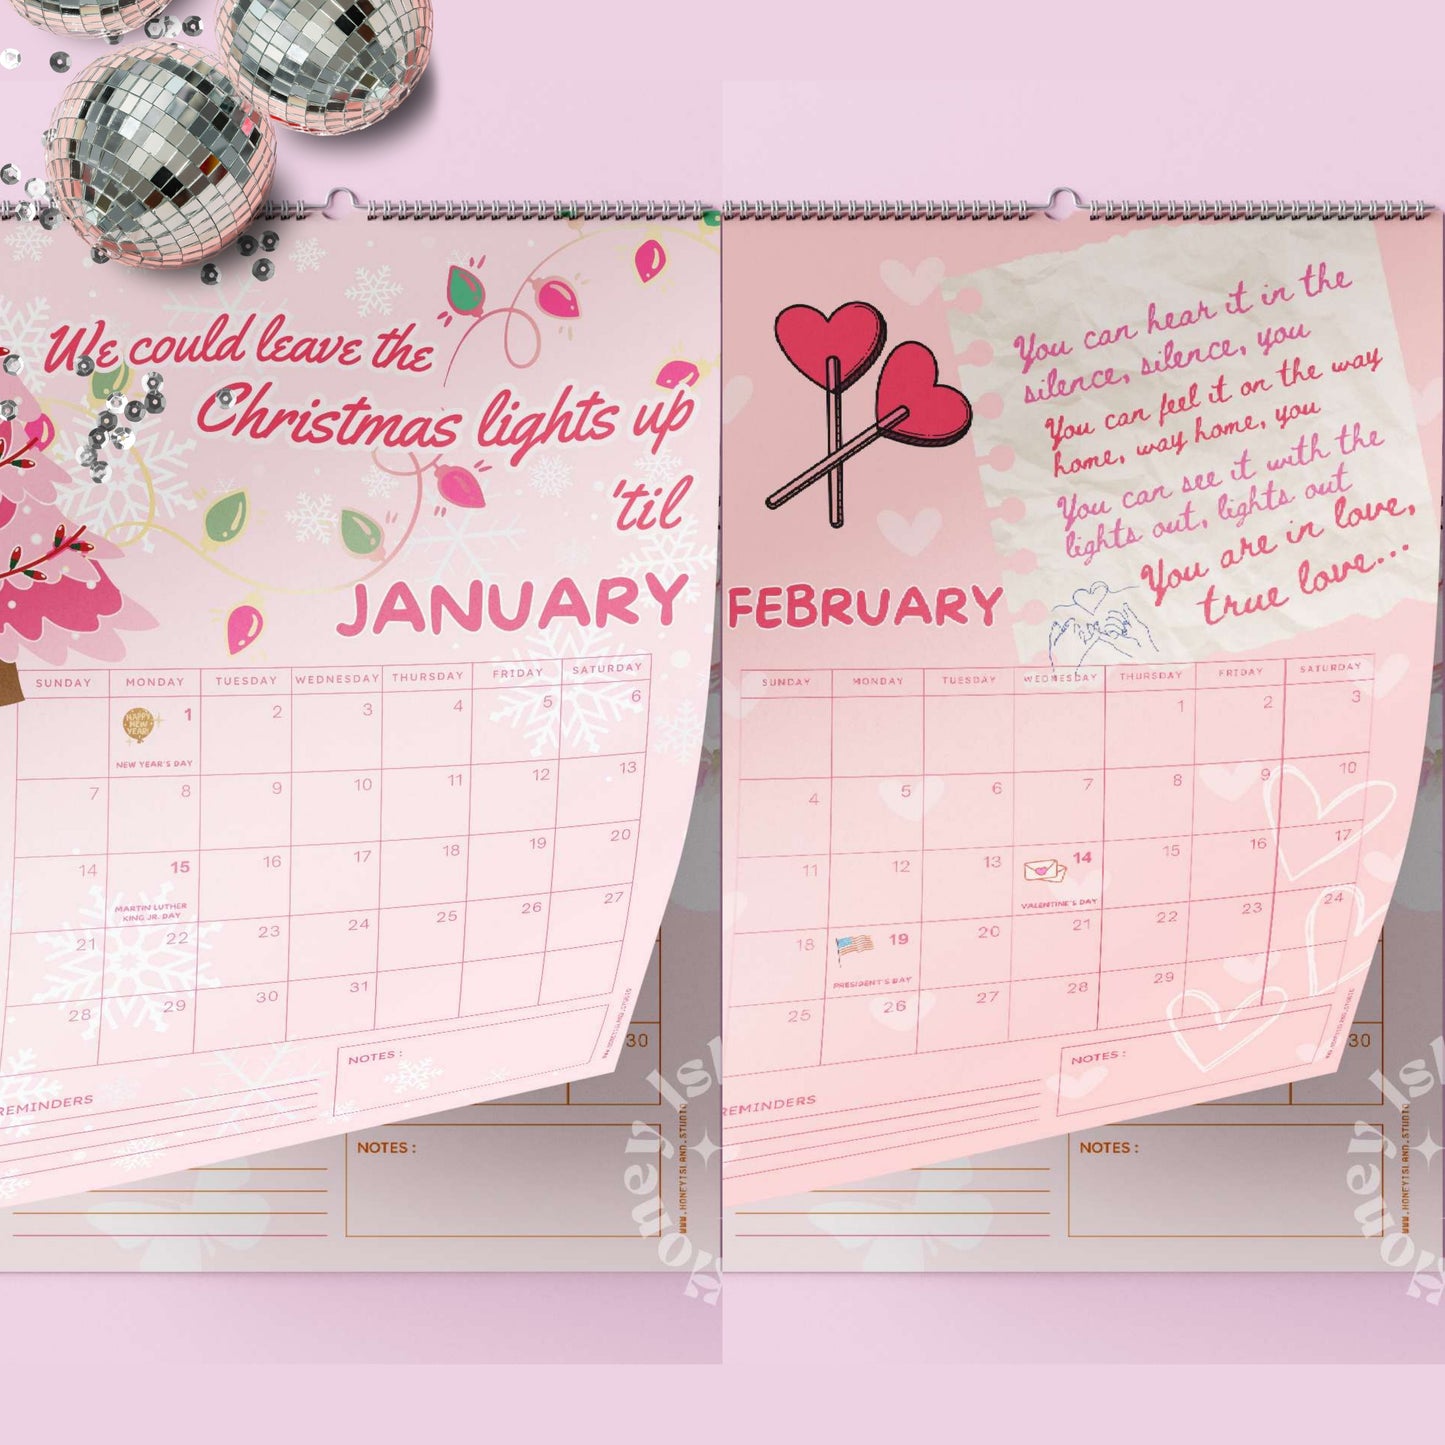 TS 2024 Calendar Daily Planner